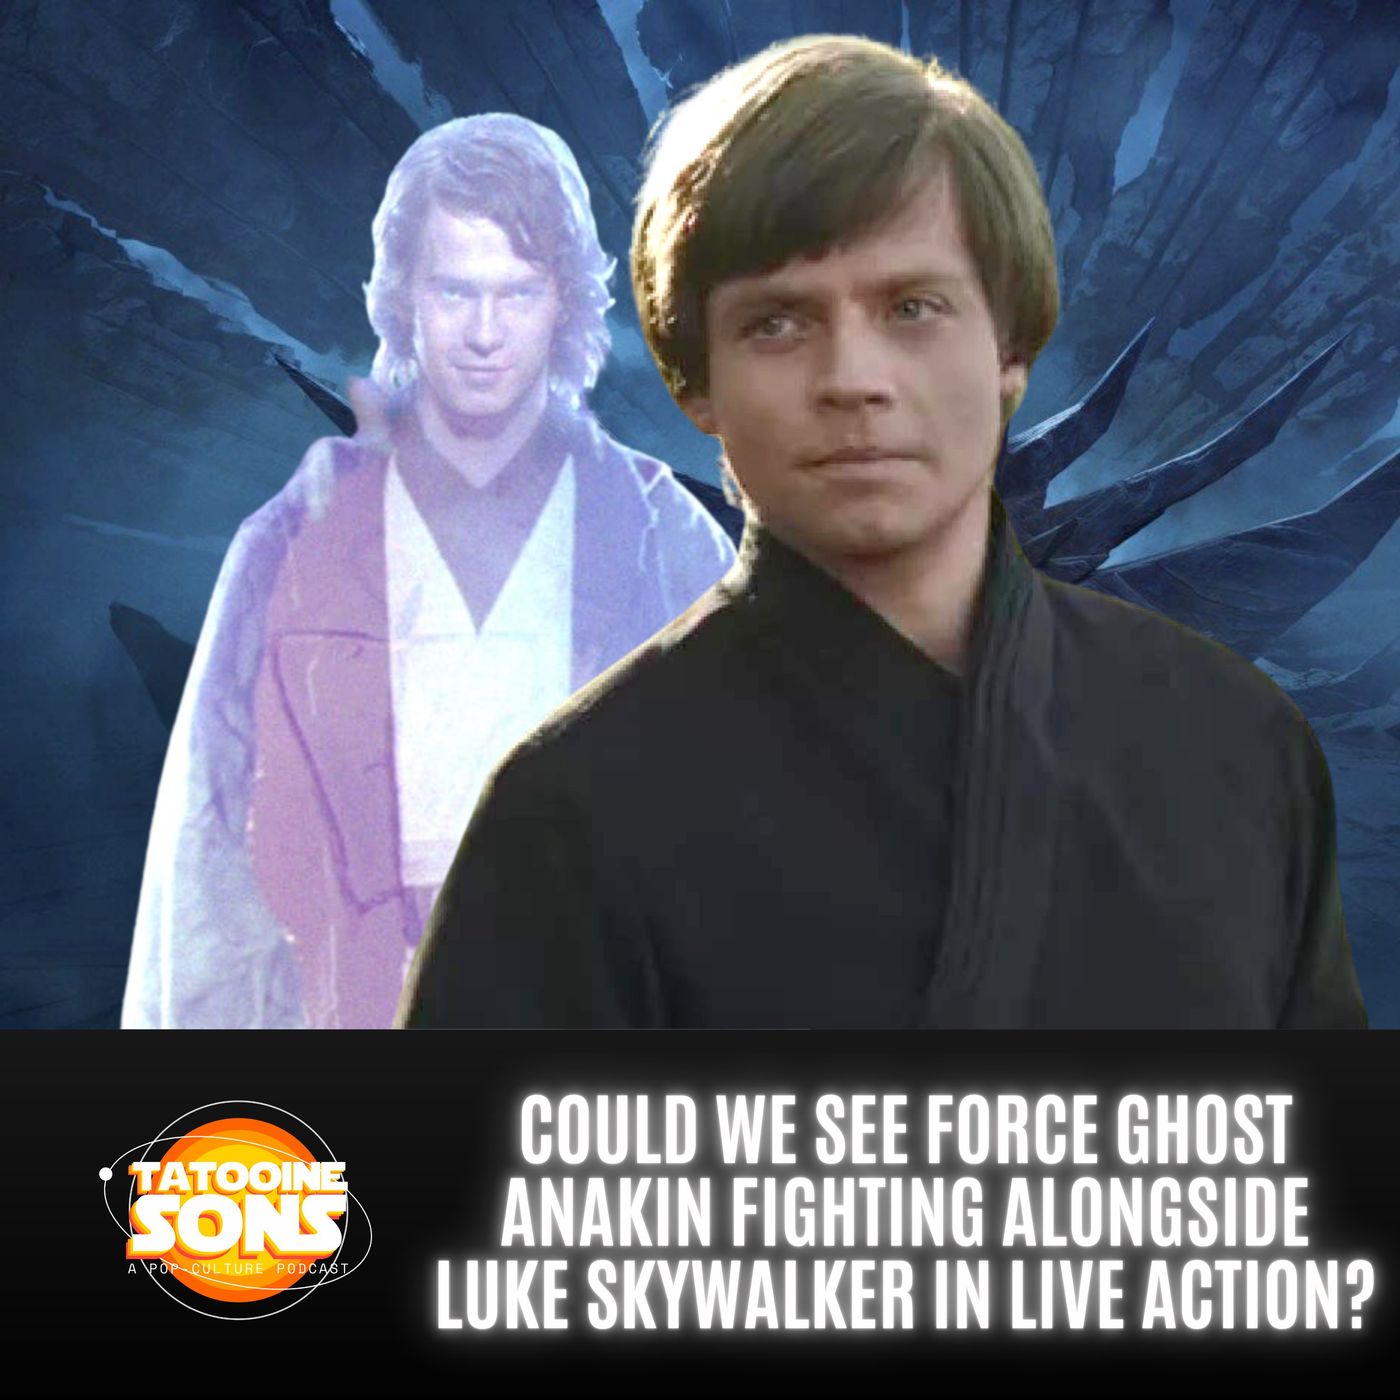 Could We See Force Ghost Anakin Fighting Alongside Luke Skywalker in LIVE ACTION?